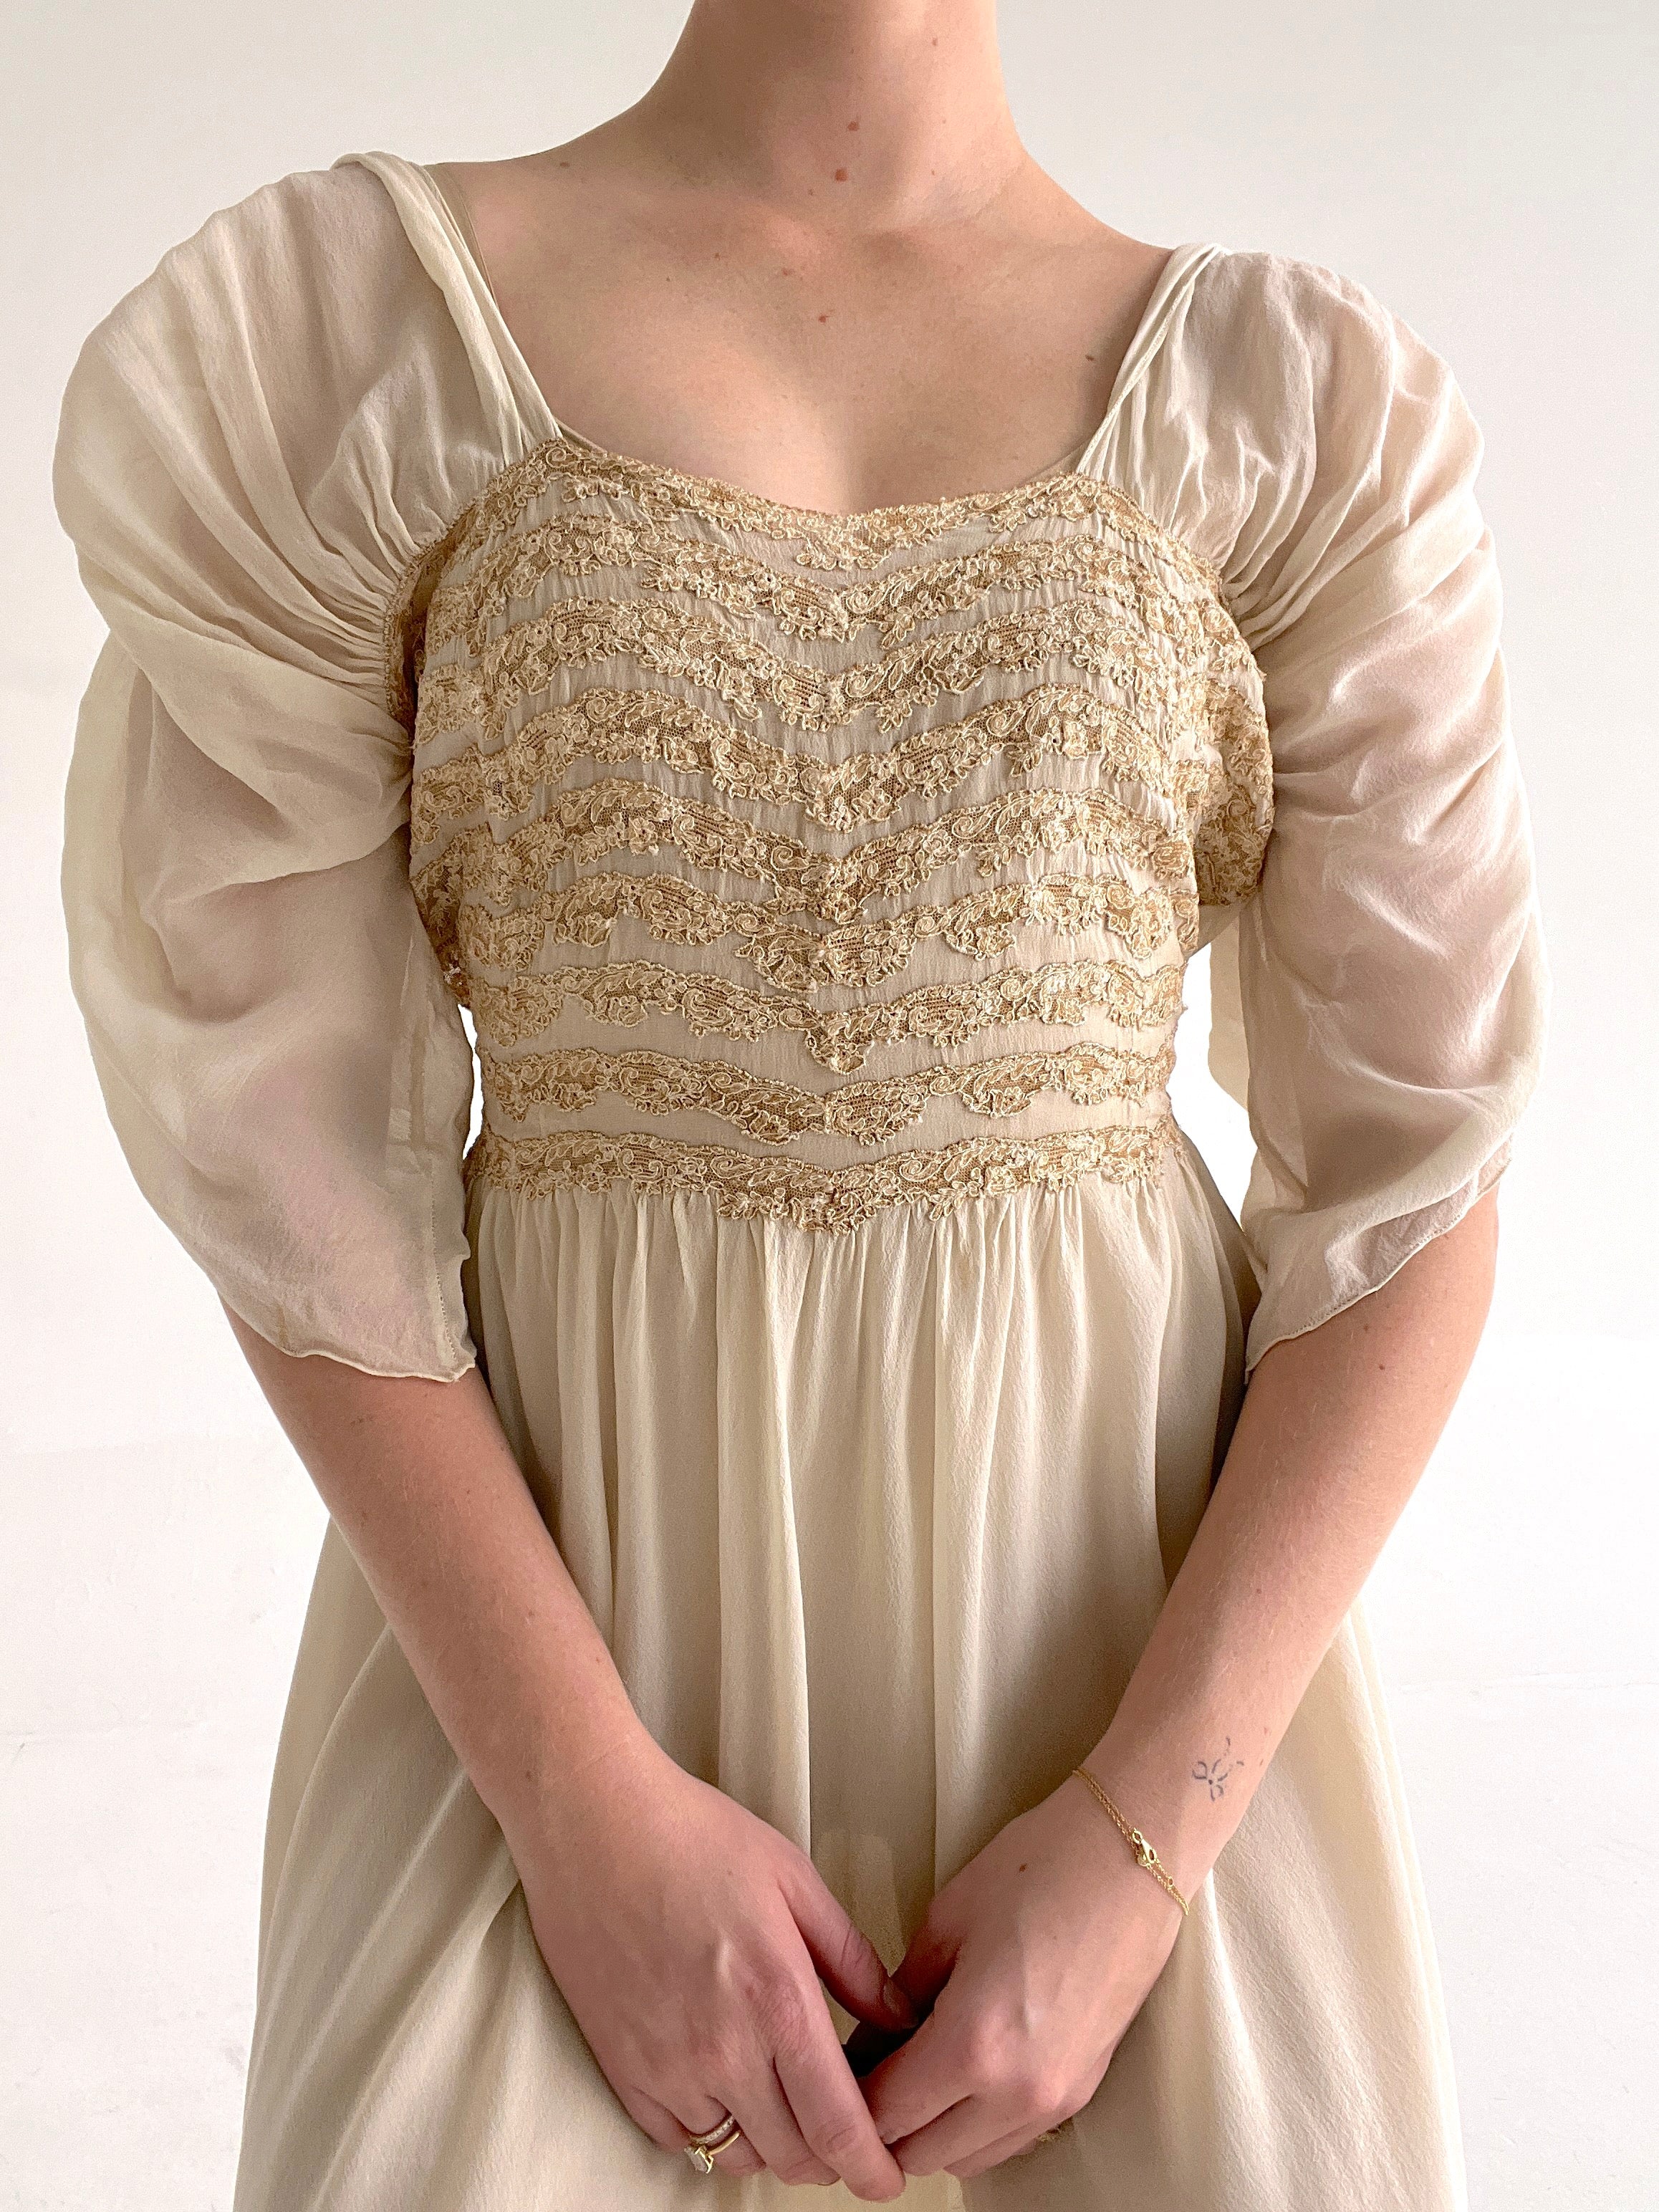 1930's Cream Silk Chiffon Gown with Cream Lace